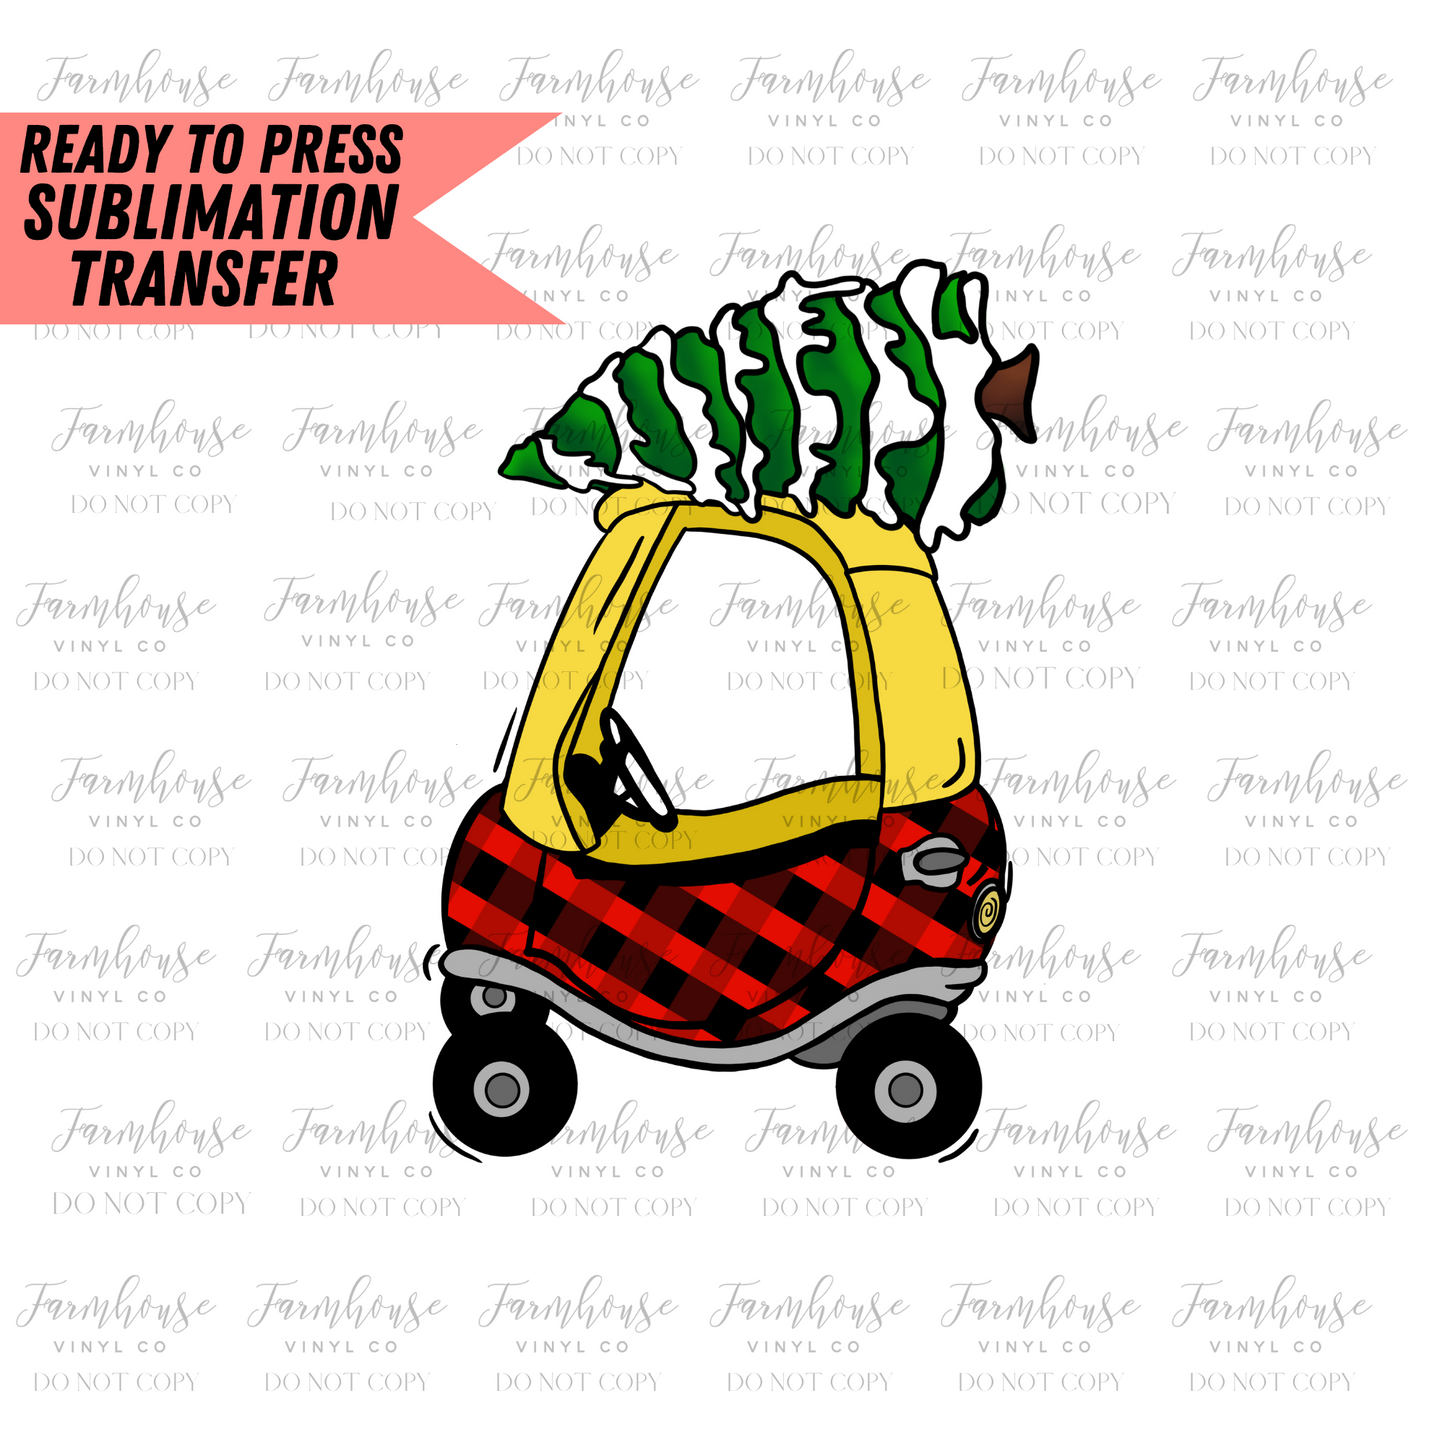 Red Car Kids Christmas Tree Ready To Press Sublimation Transfer - Farmhouse Vinyl Co